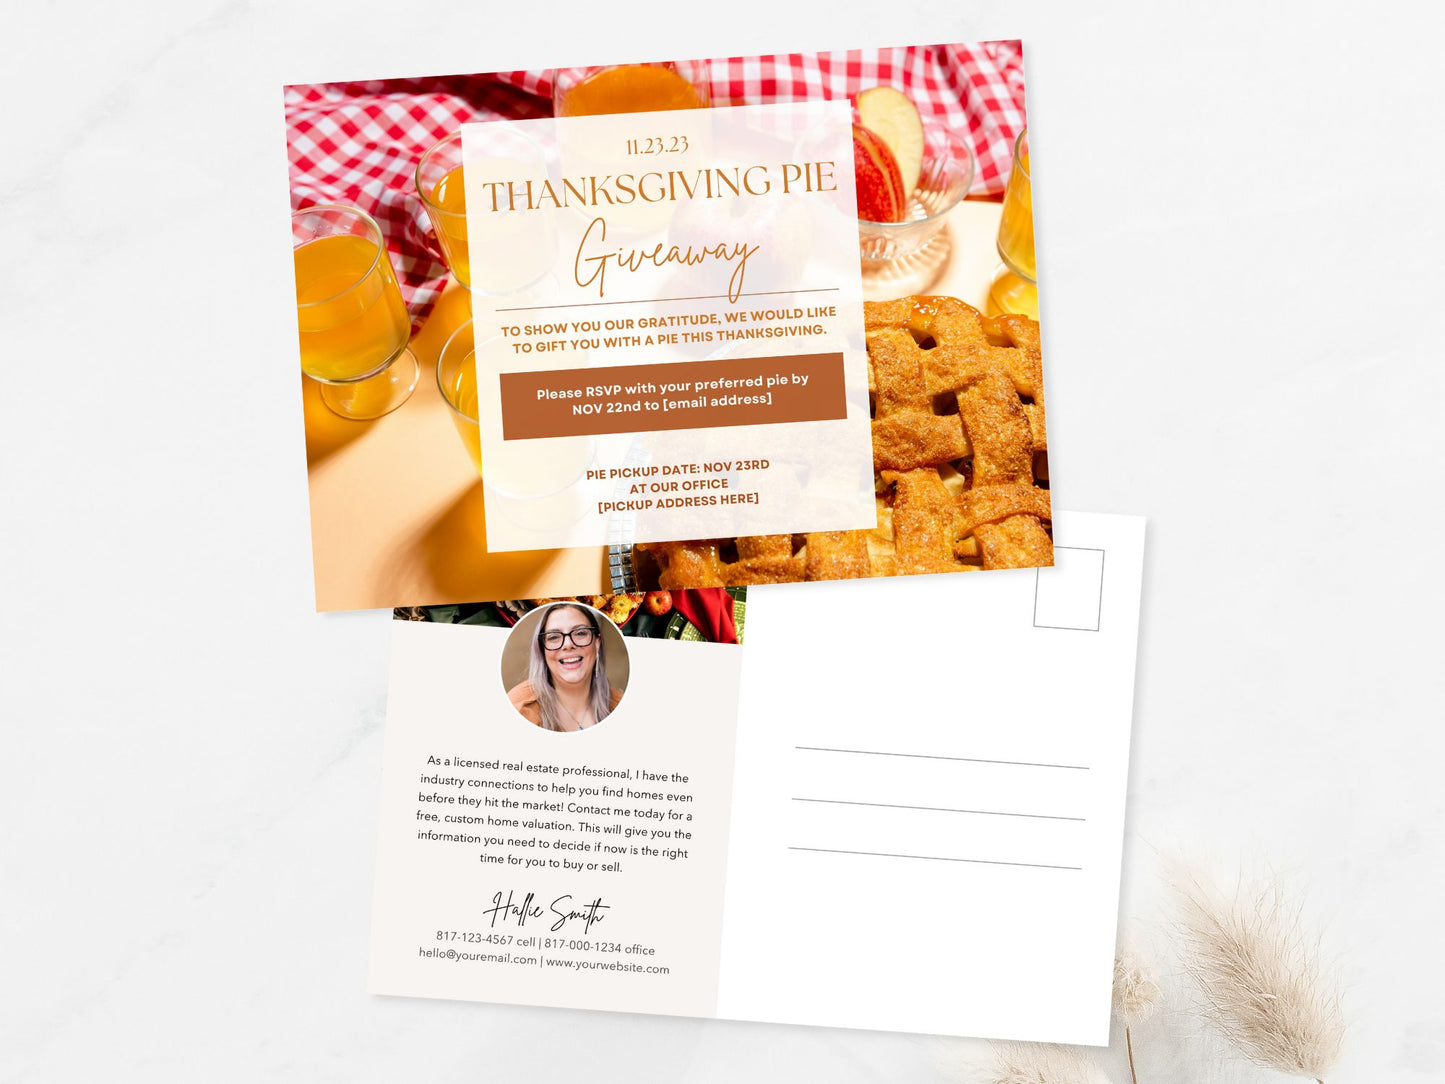 Thanksgiving Pie Giveaway Postcard